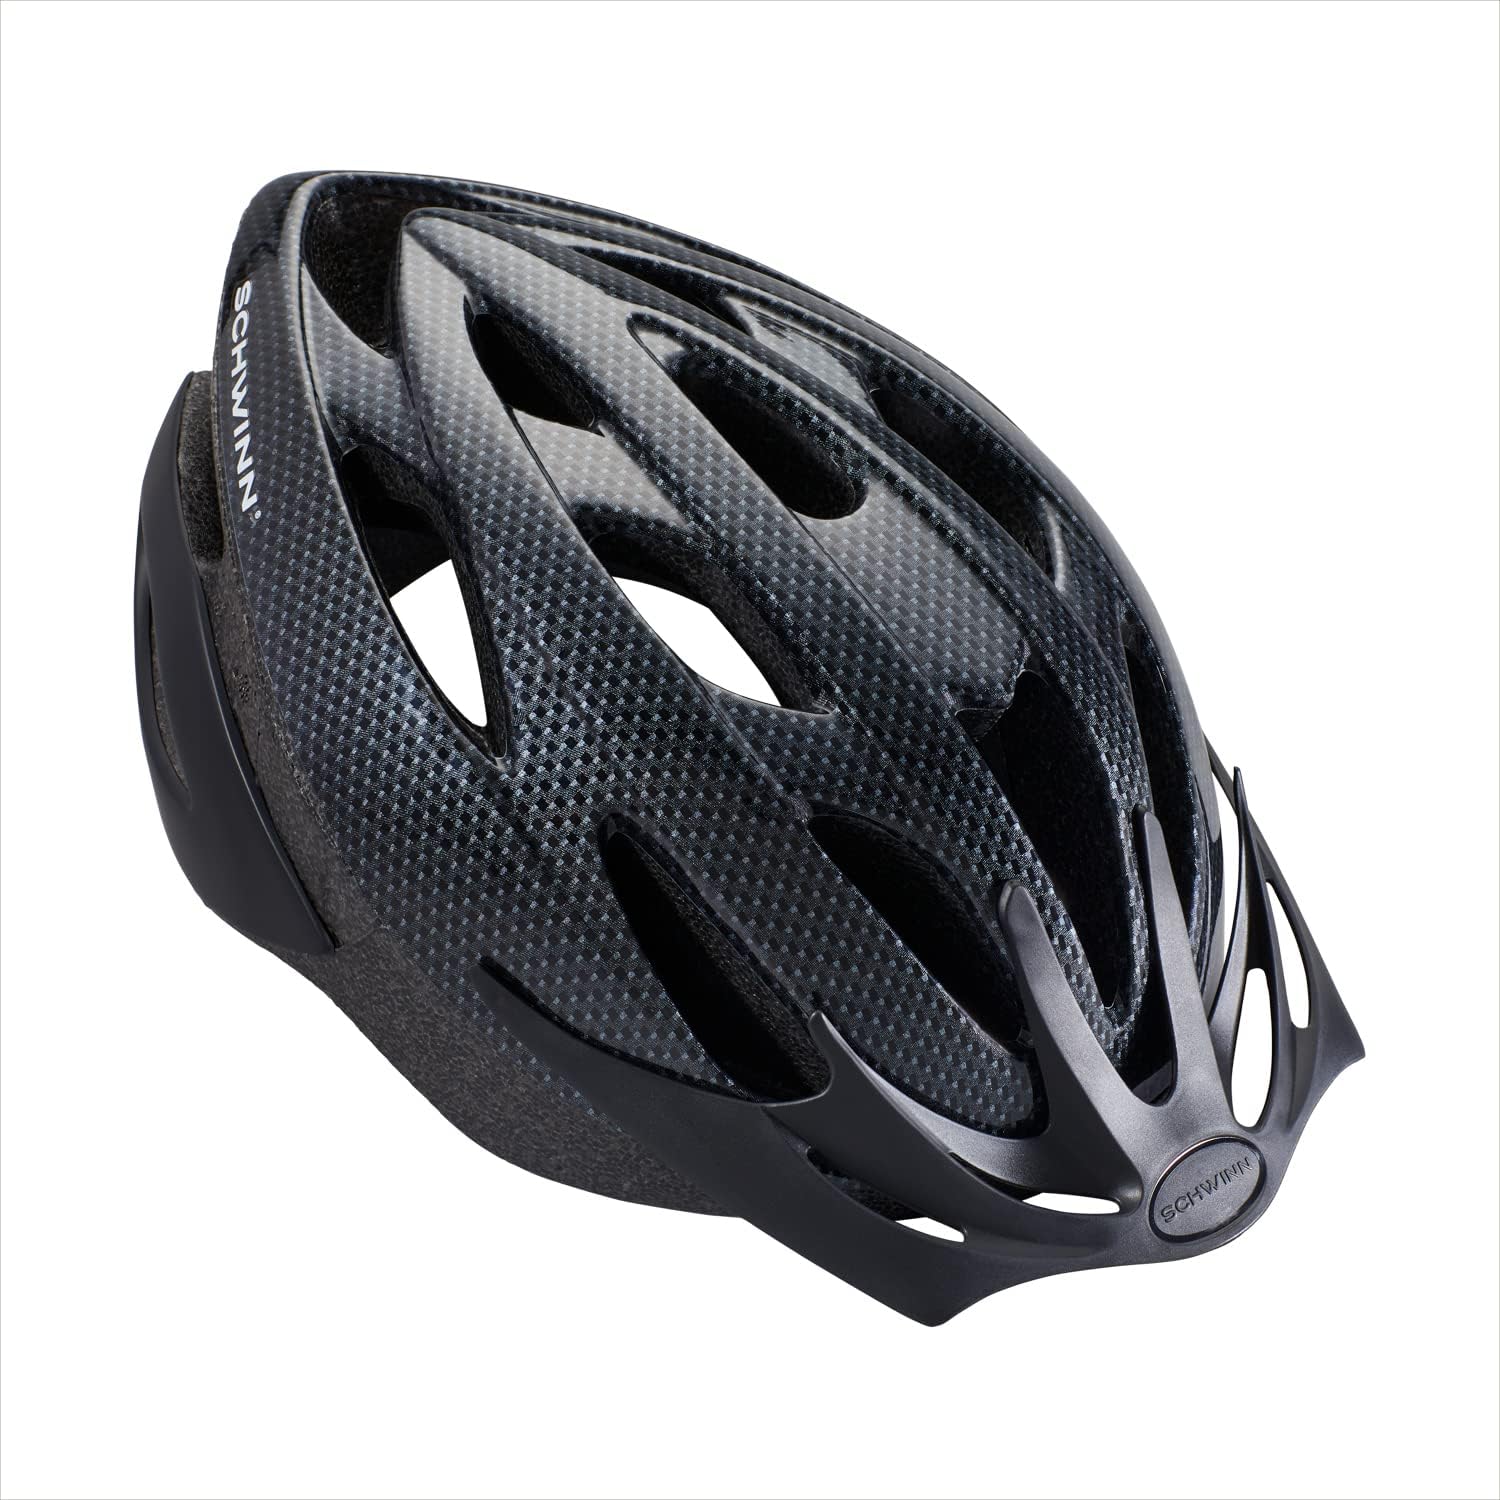 Schwinn Thrasher Bike Helmet Review